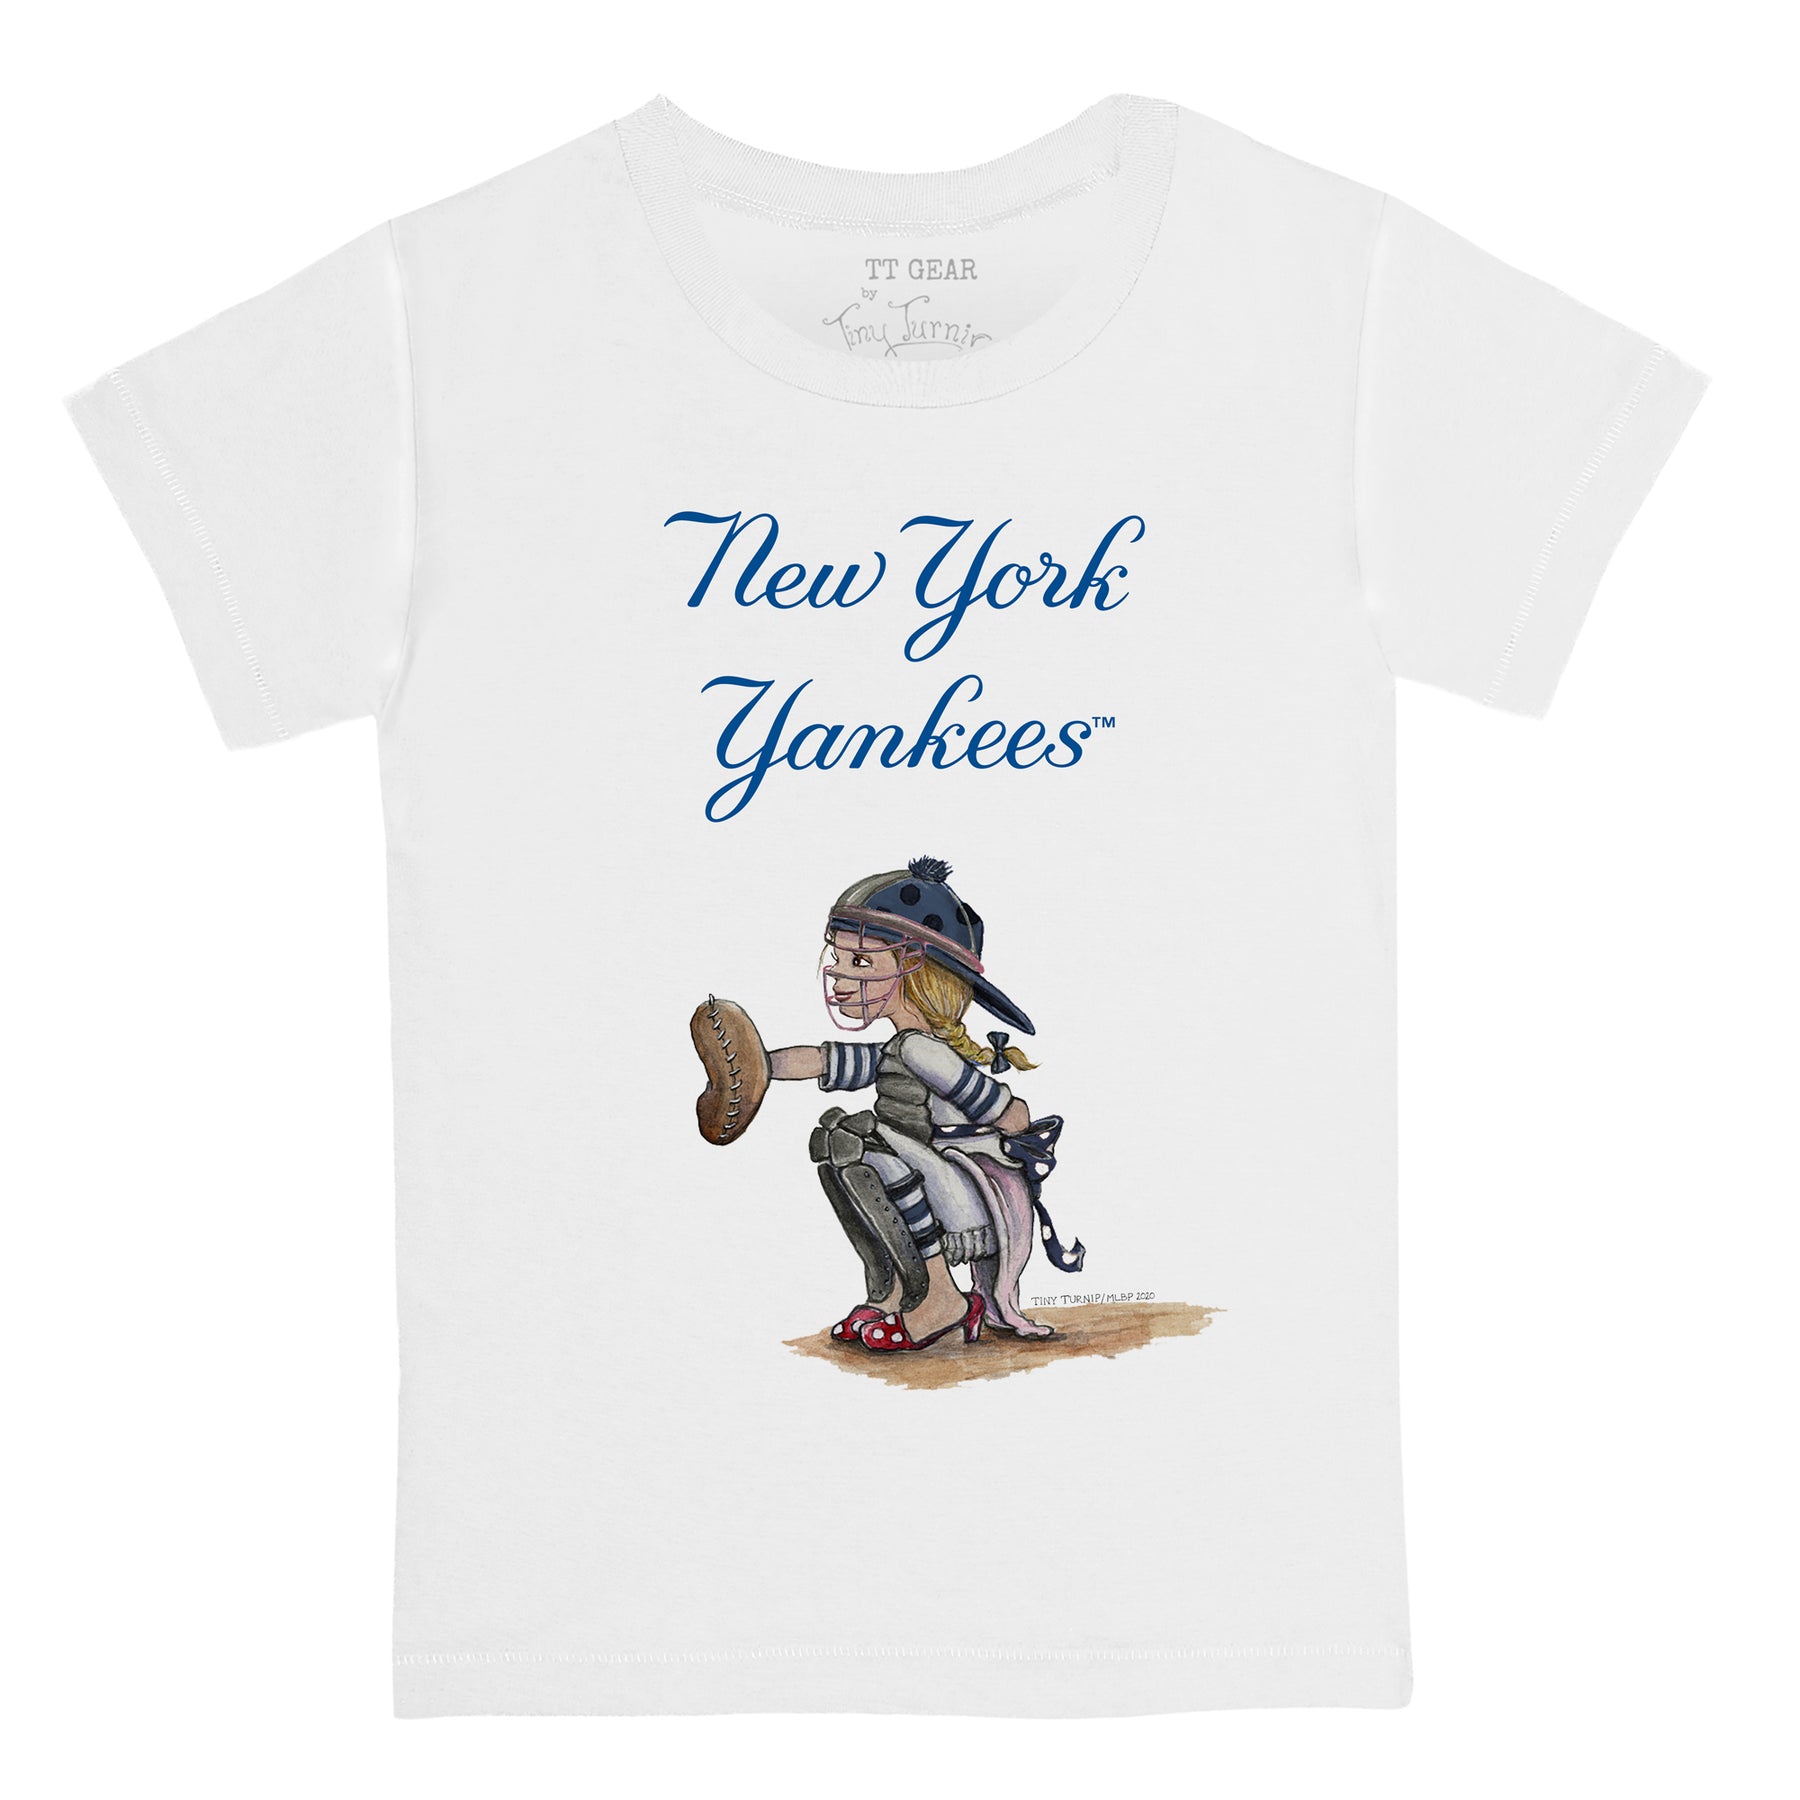 New York Yankees Kate the Catcher Tee Shirt